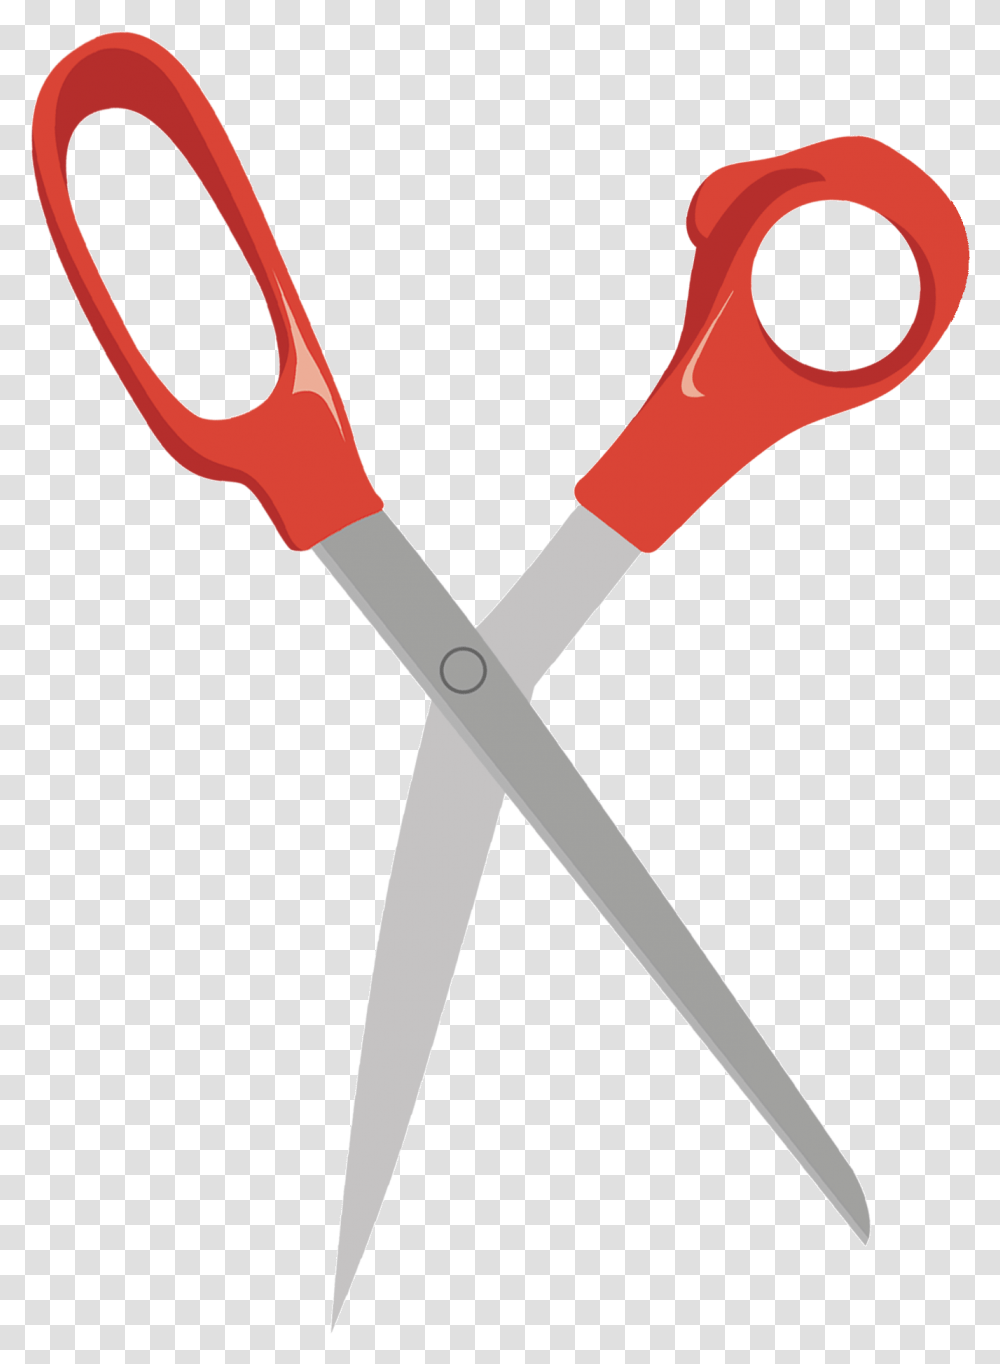 Scissors Forever Scissor Gif No Background, Weapon, Weaponry, Blade, Shears Transparent Png